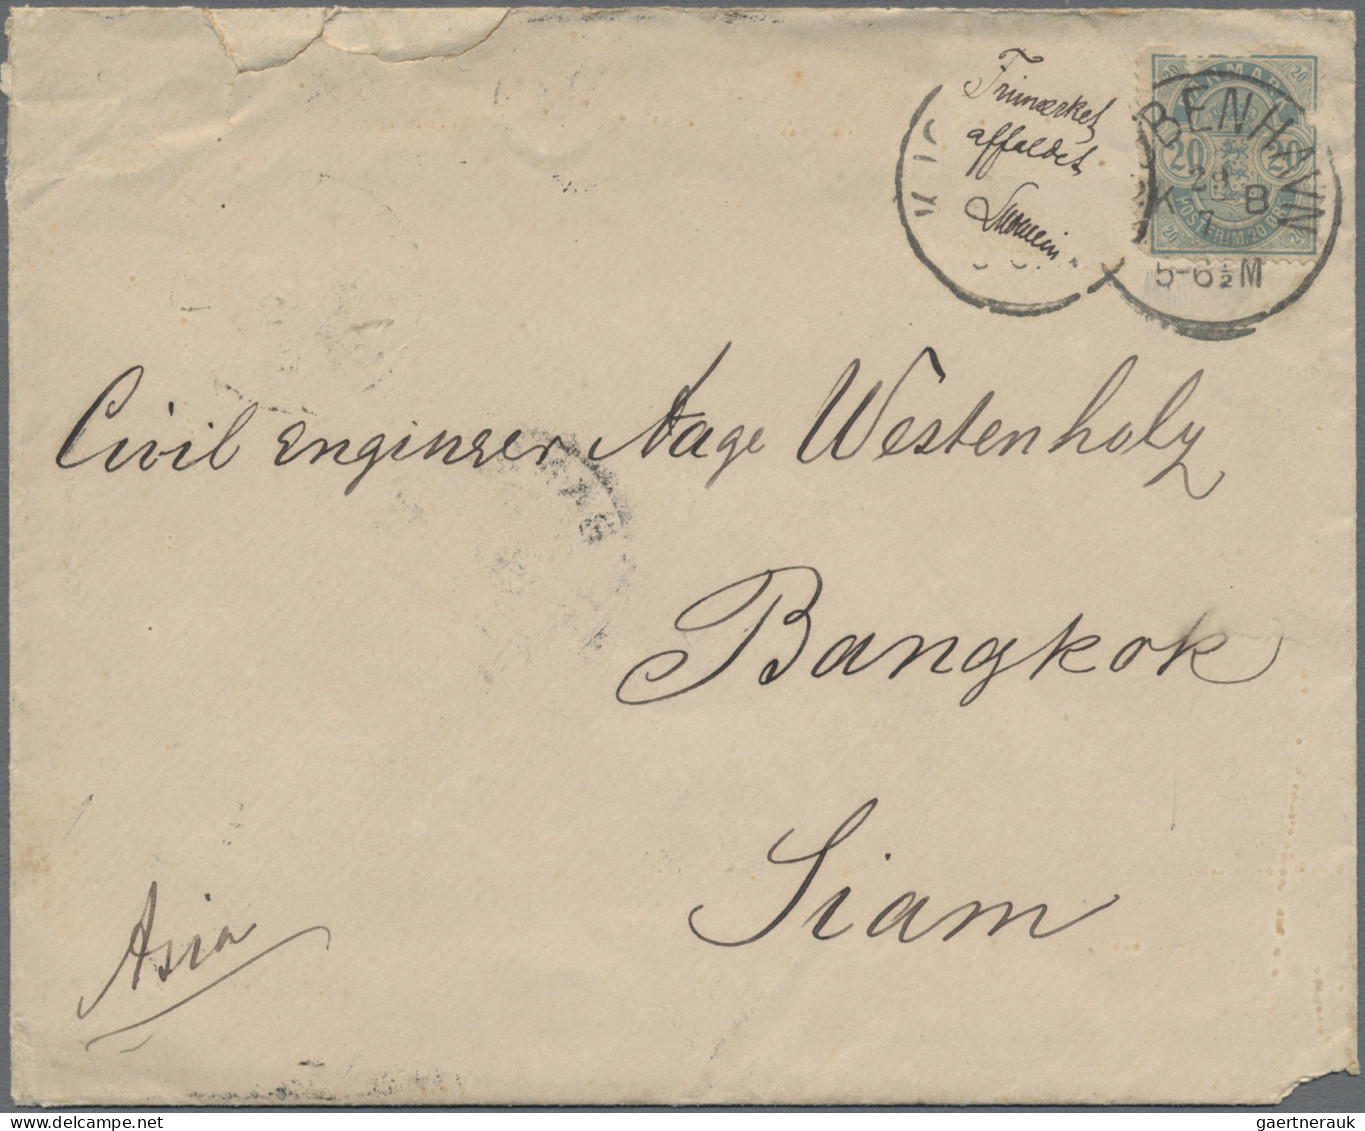 Thailand - Incoming Mail: 1886 Cover From Cobenhagen, DENMARK To Bangkok, Franke - Thailand